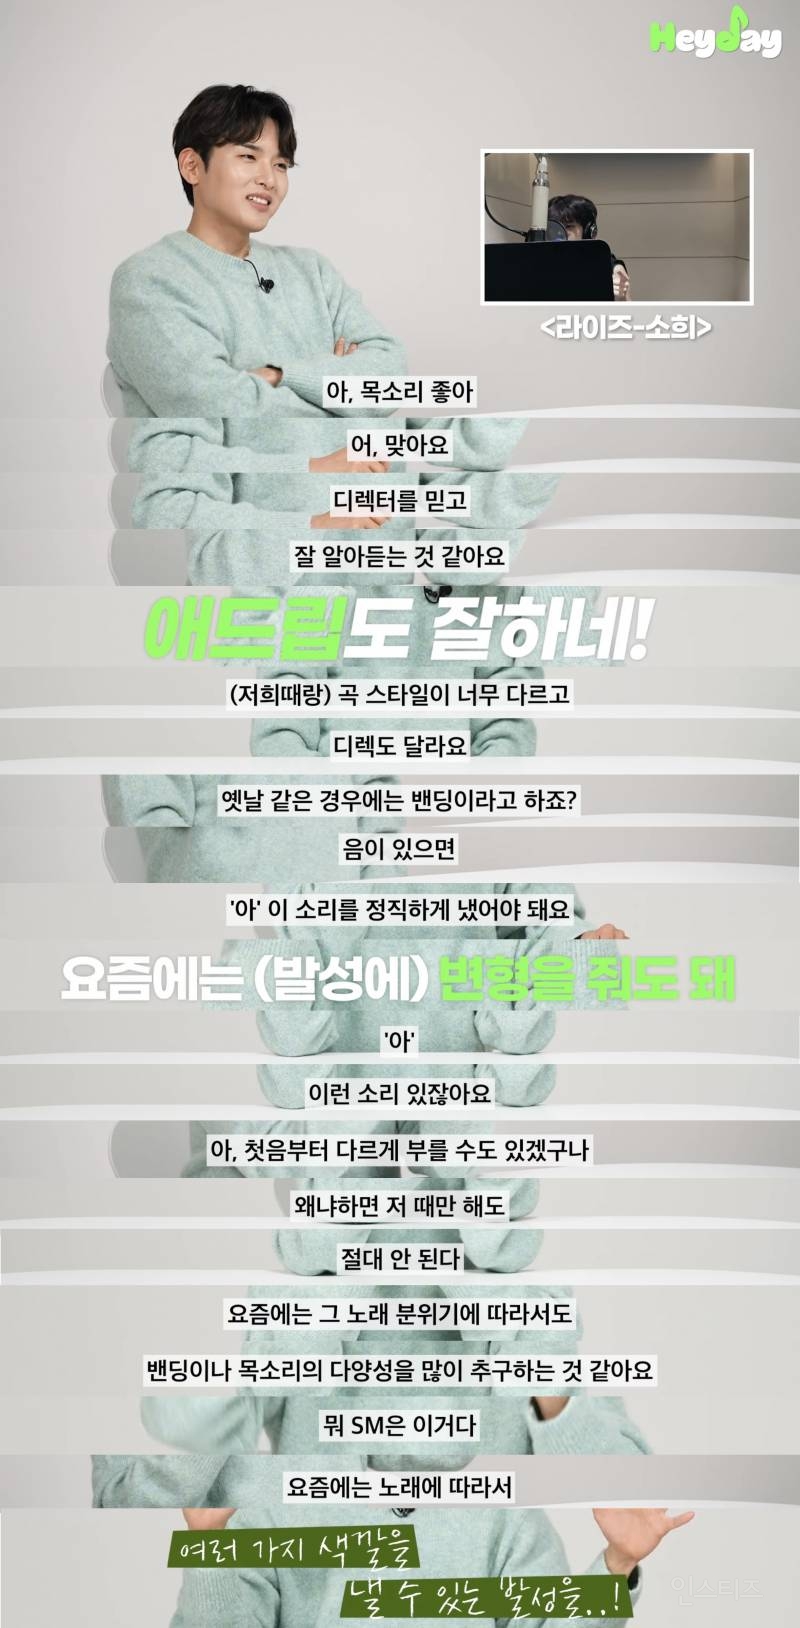 SM 선배 슈주 려욱이 리뷰하는 SM 신인 남돌 라이즈 보컬 수준 | 인스티즈